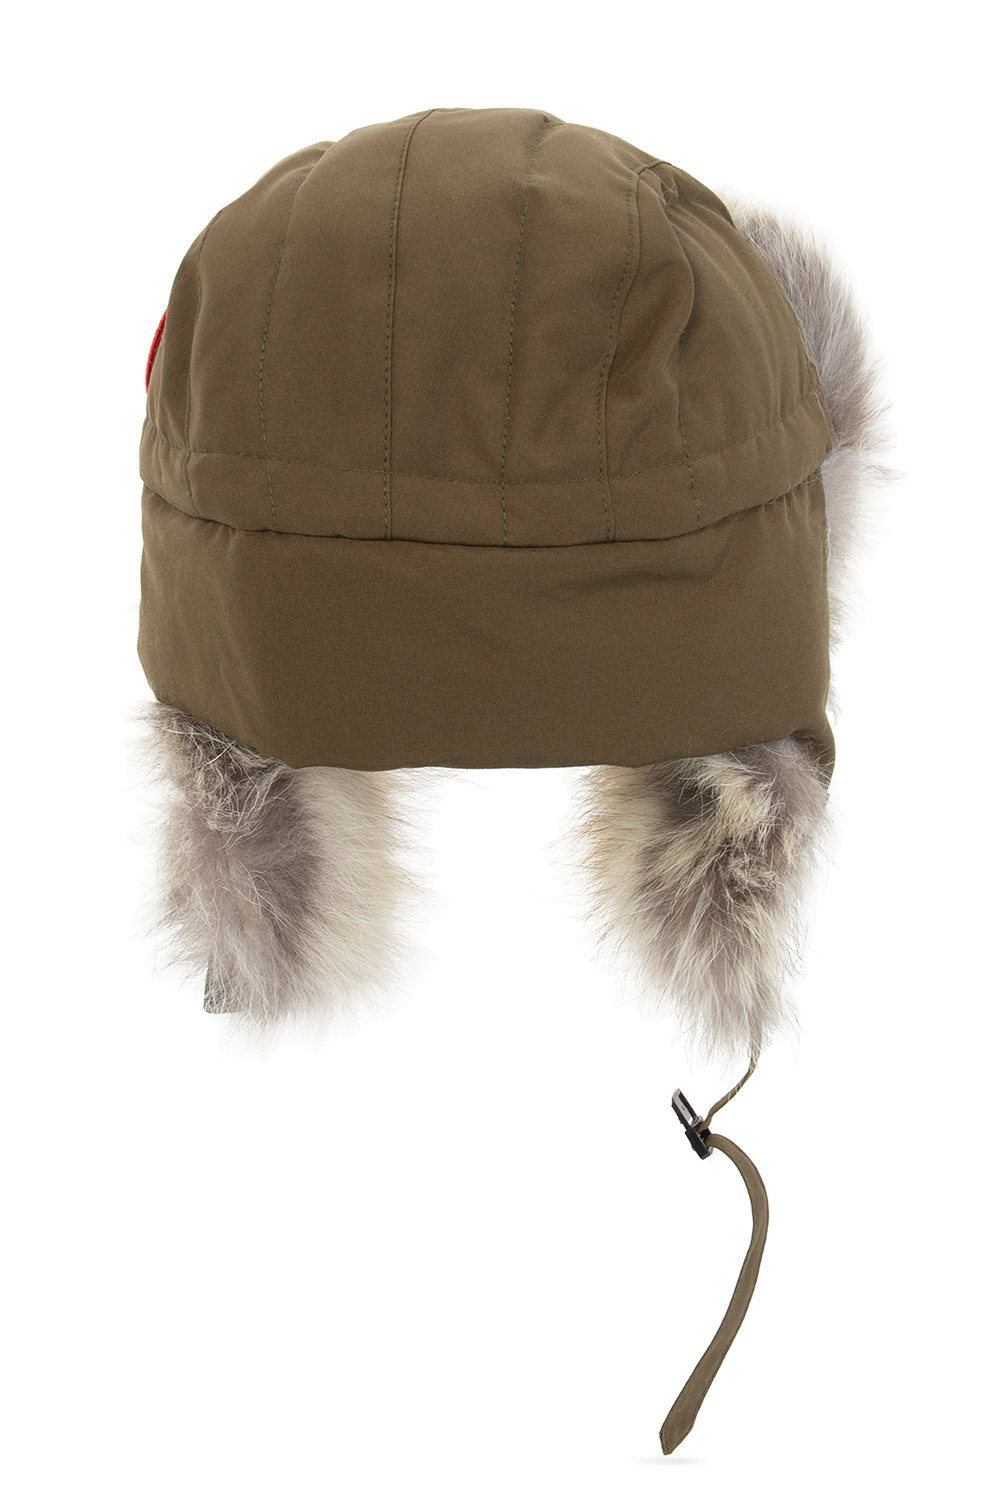 Canada Goose hat sleece with earmuffs